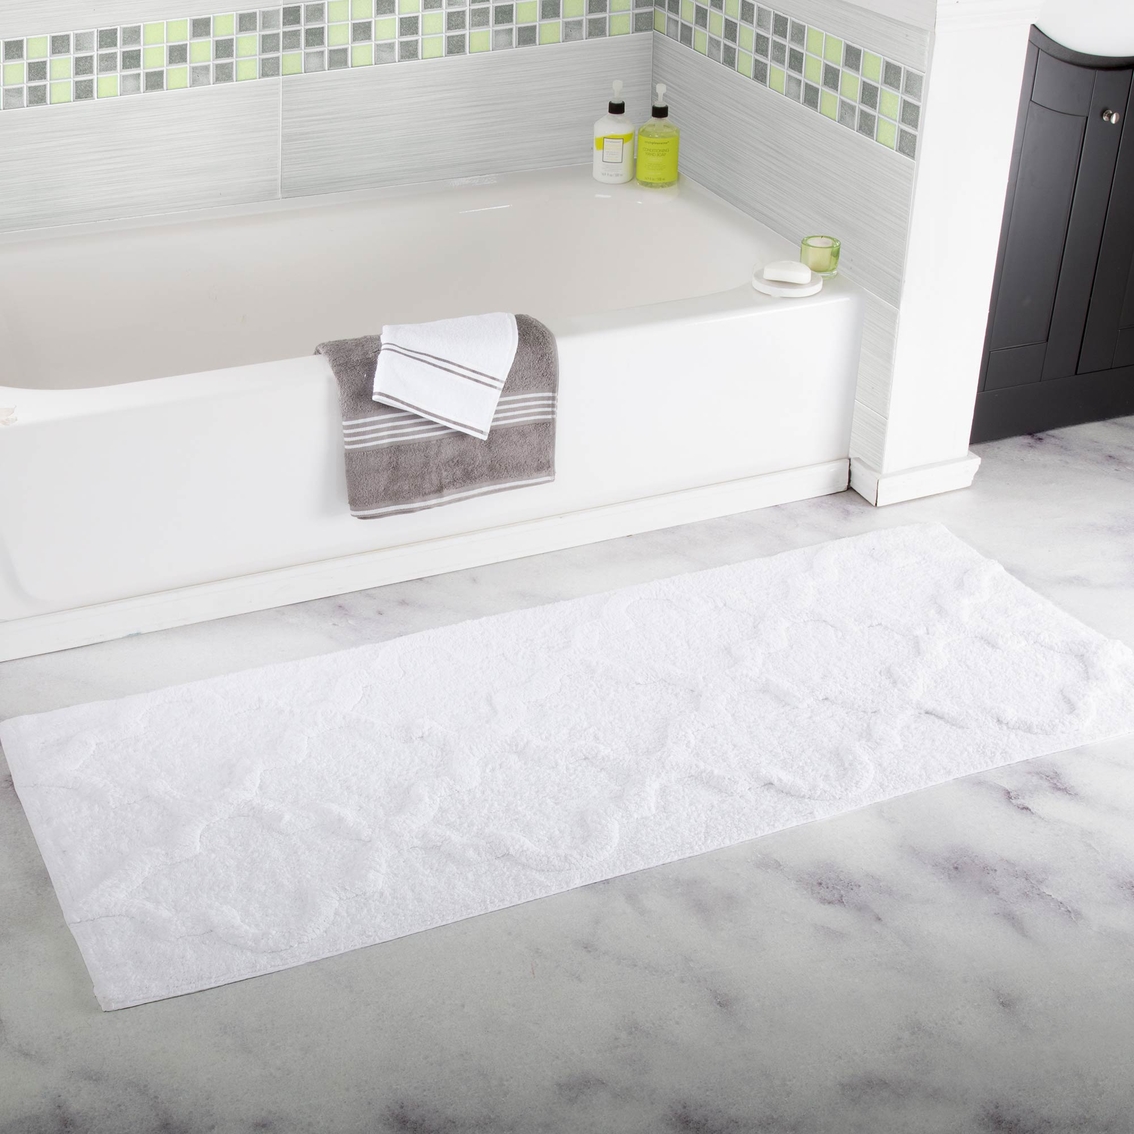 Lavish Home Trellis Bath Mat - Image 2 of 2